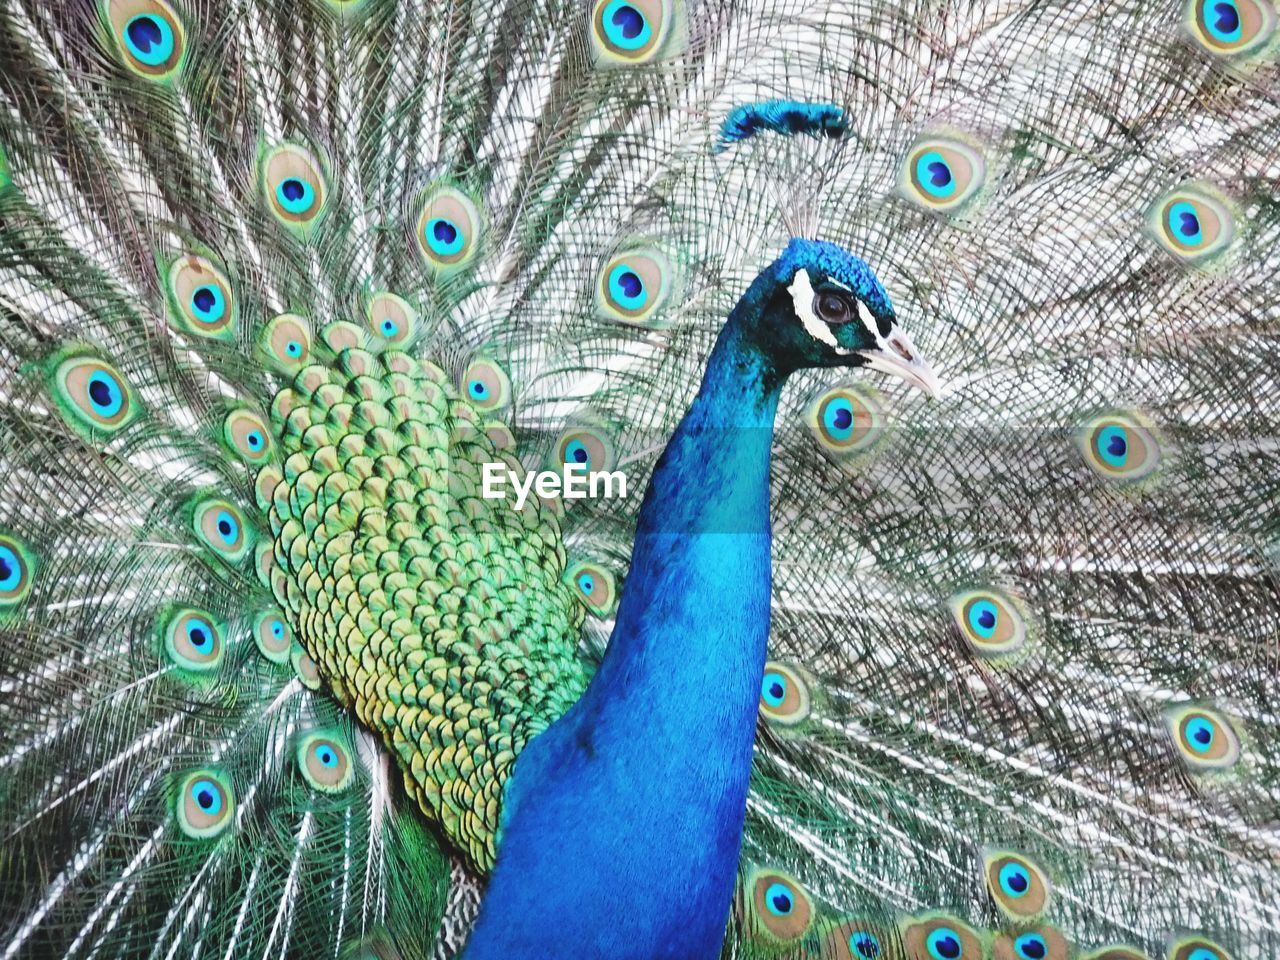 Peacock at dresden zoo 